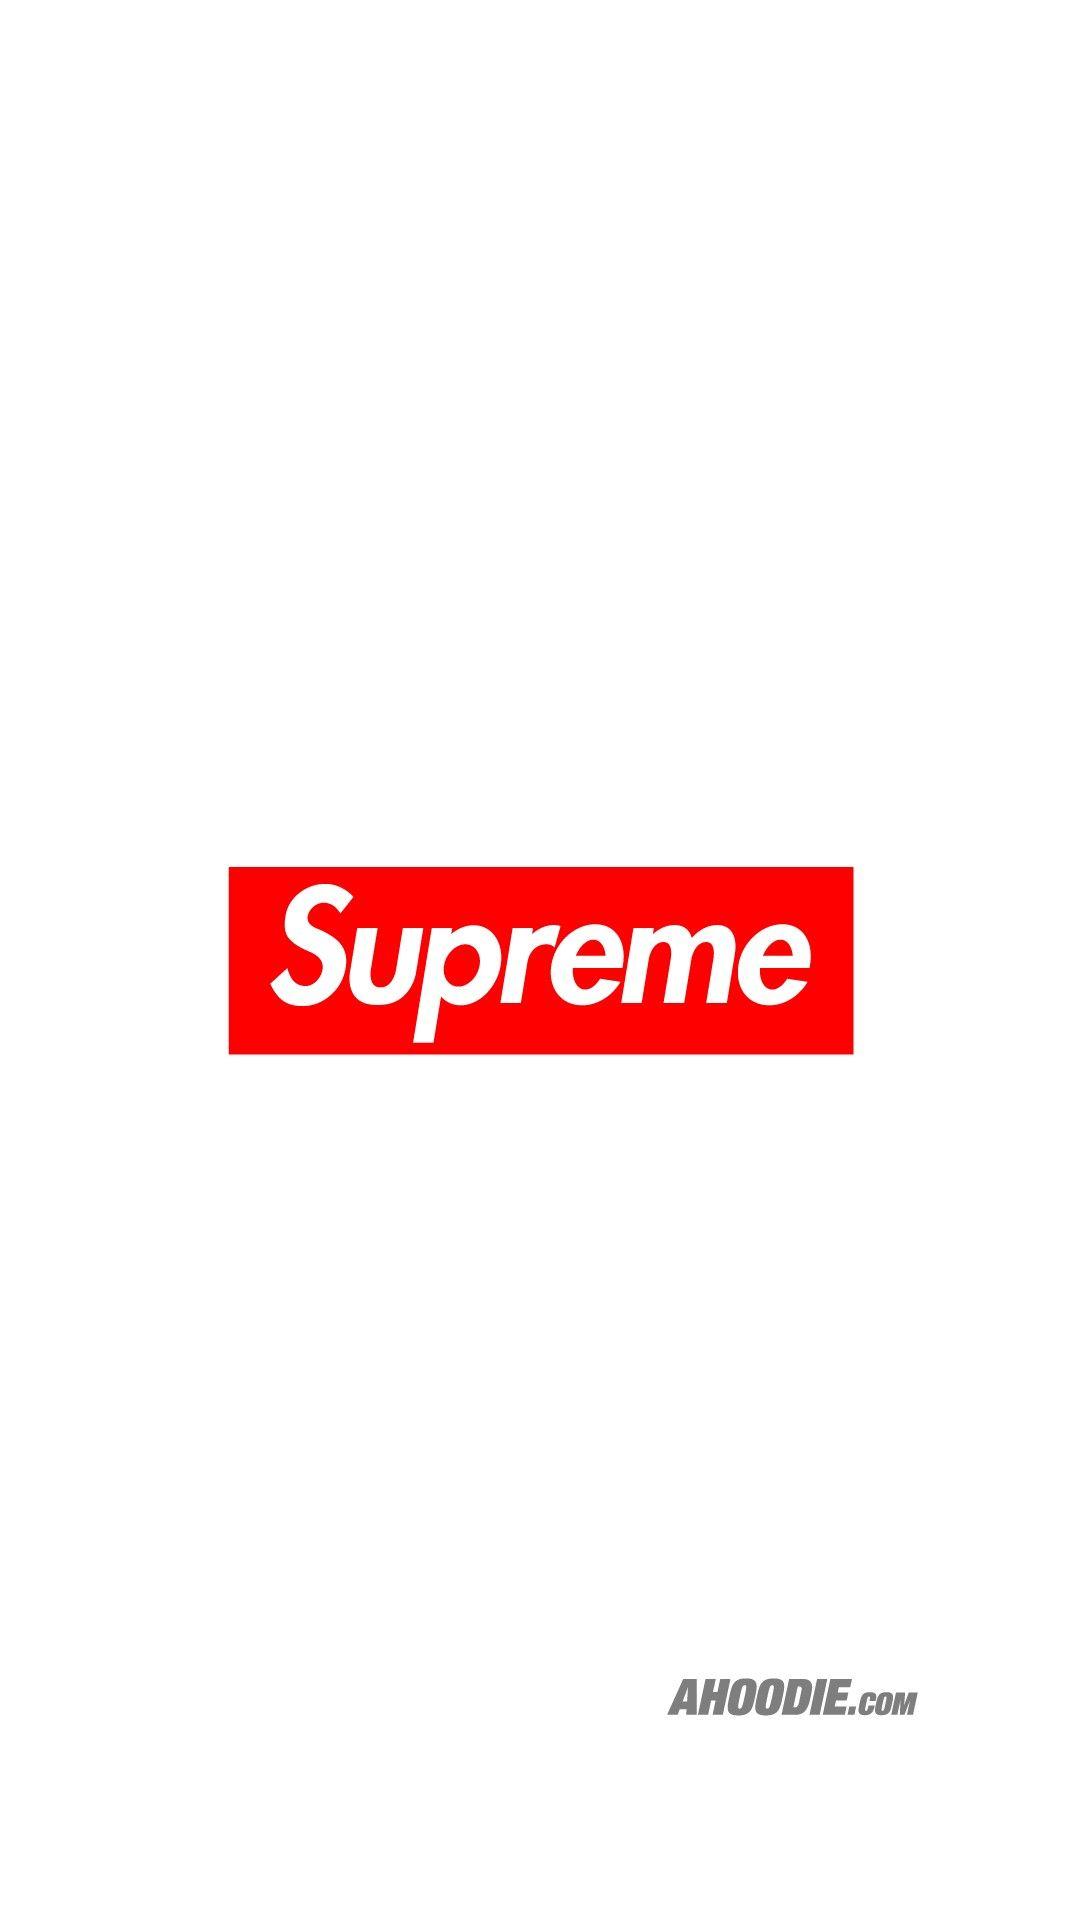 Supreme Logo Wallpapers Top Free Supreme Logo Backgrounds Wallpaperaccess